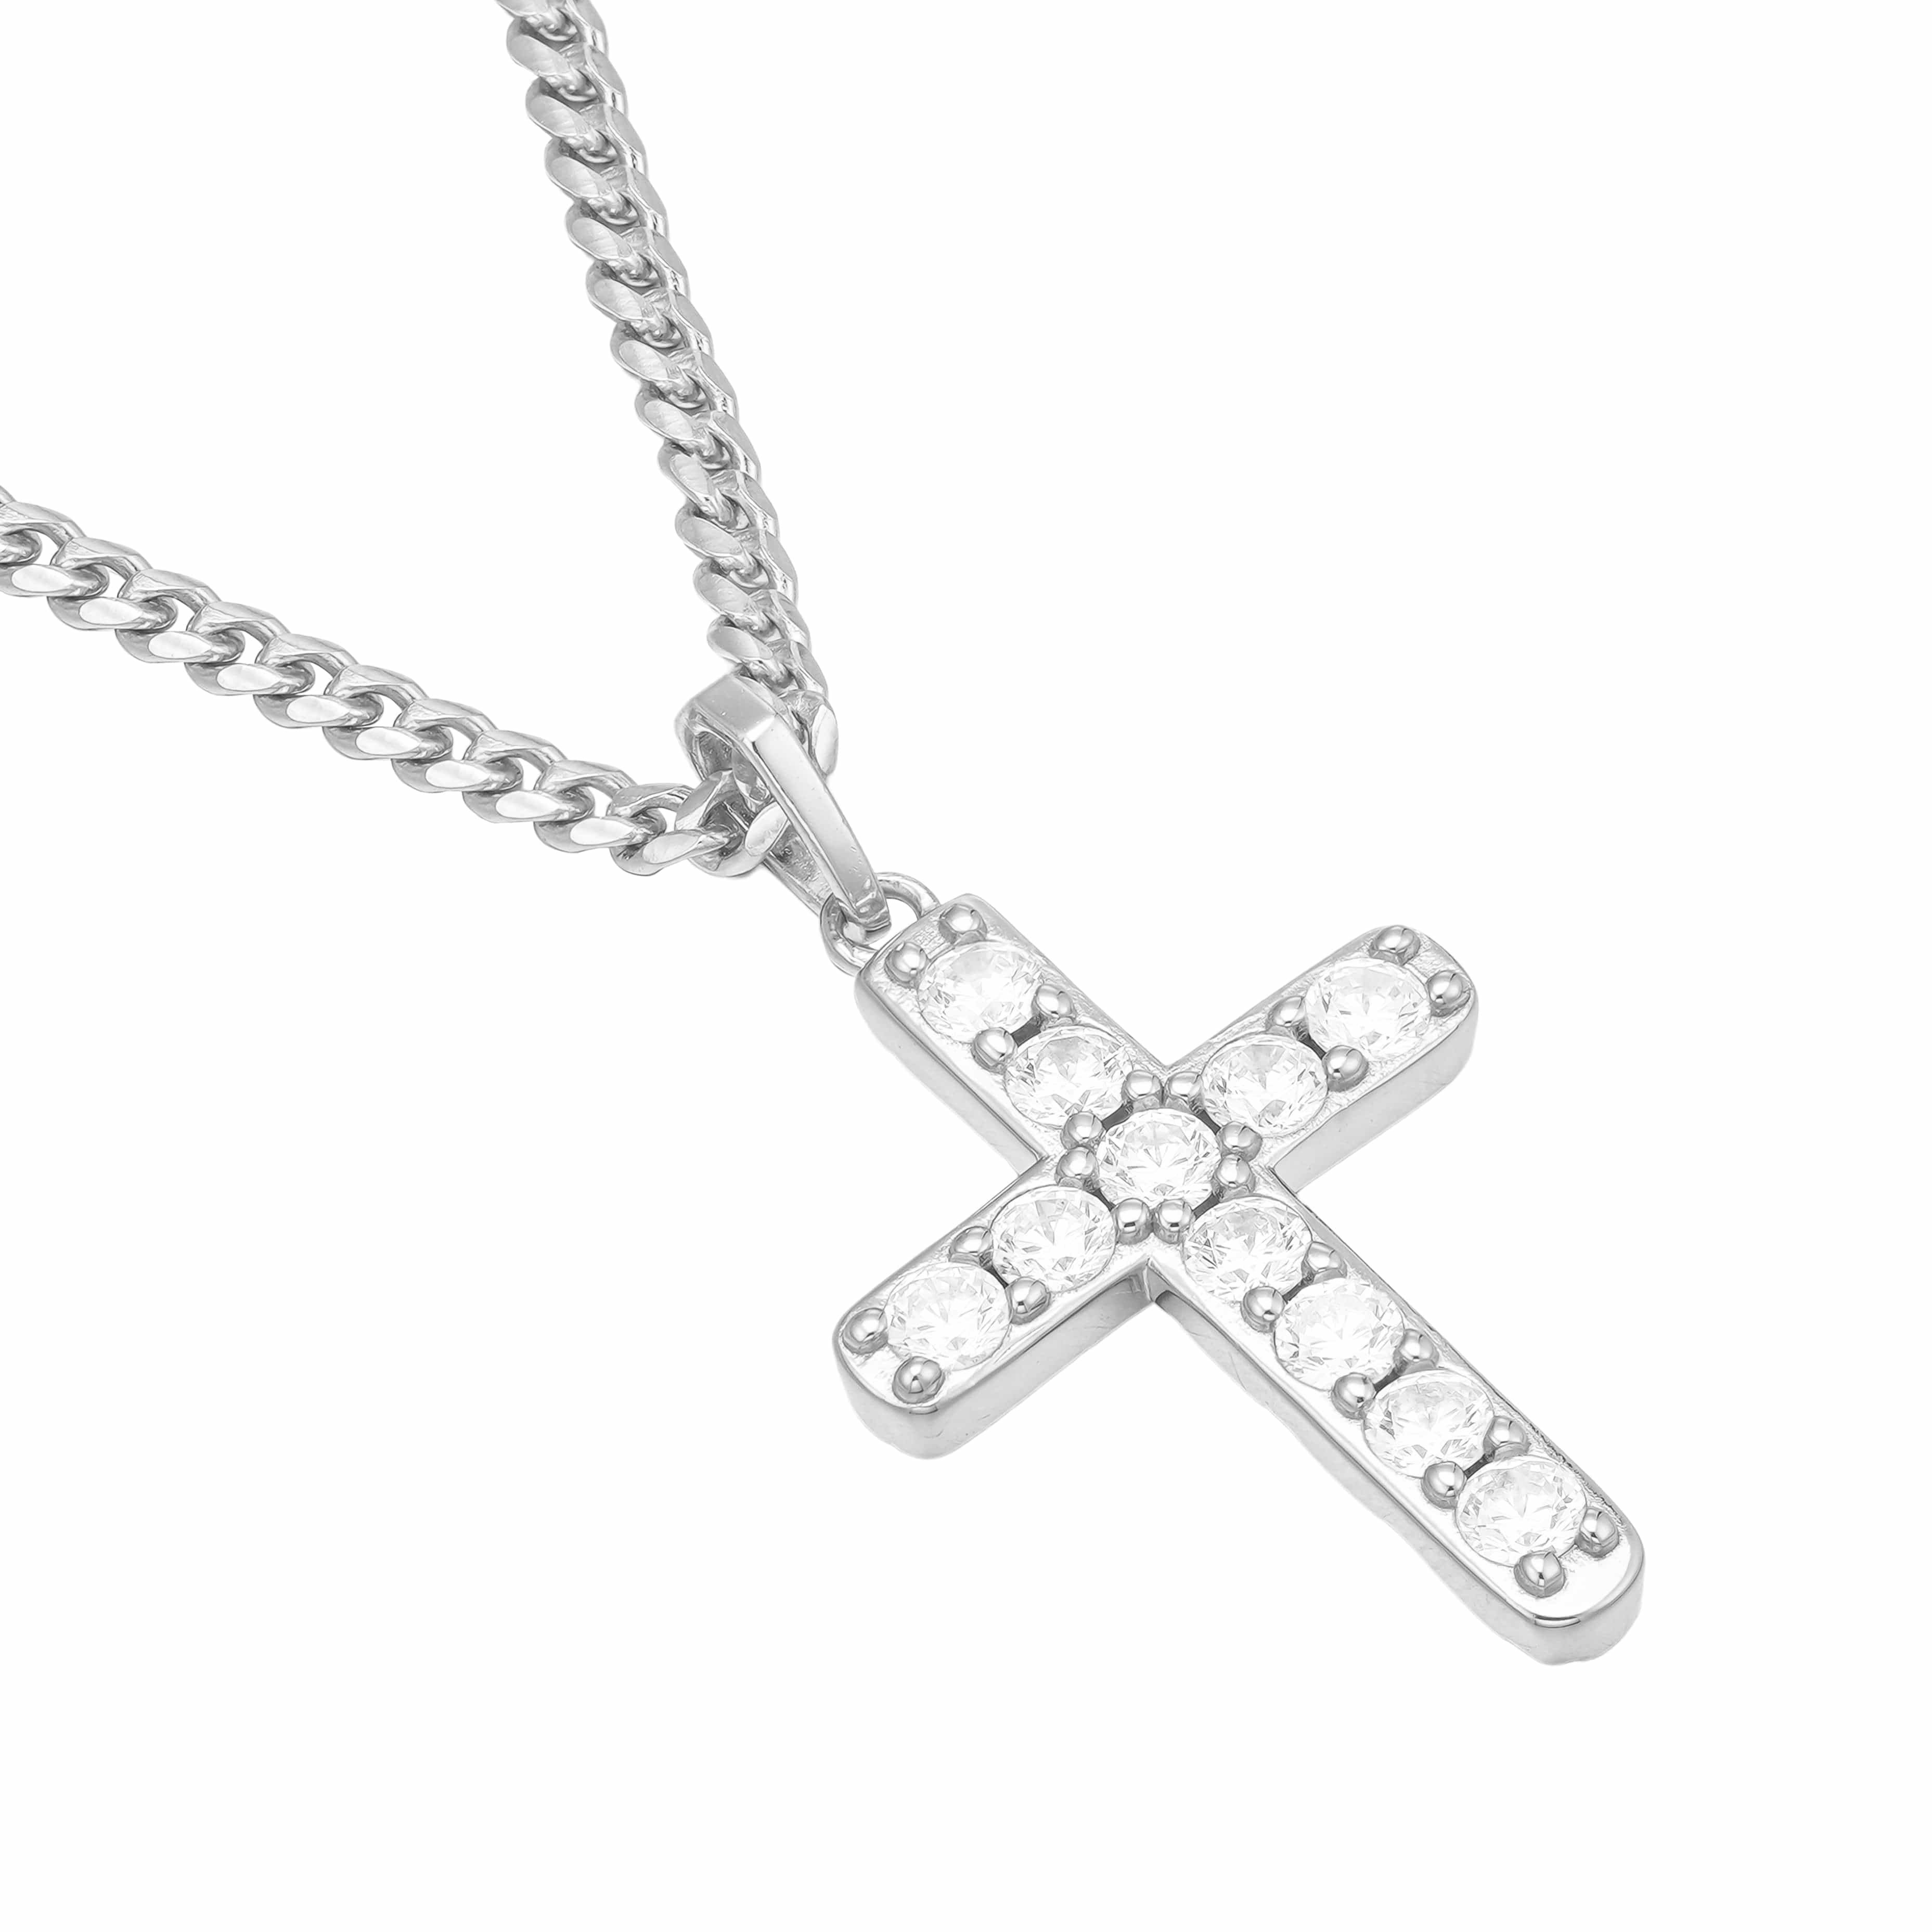 All Wear Jewellery Micro Studded Cross Pendant - Silver